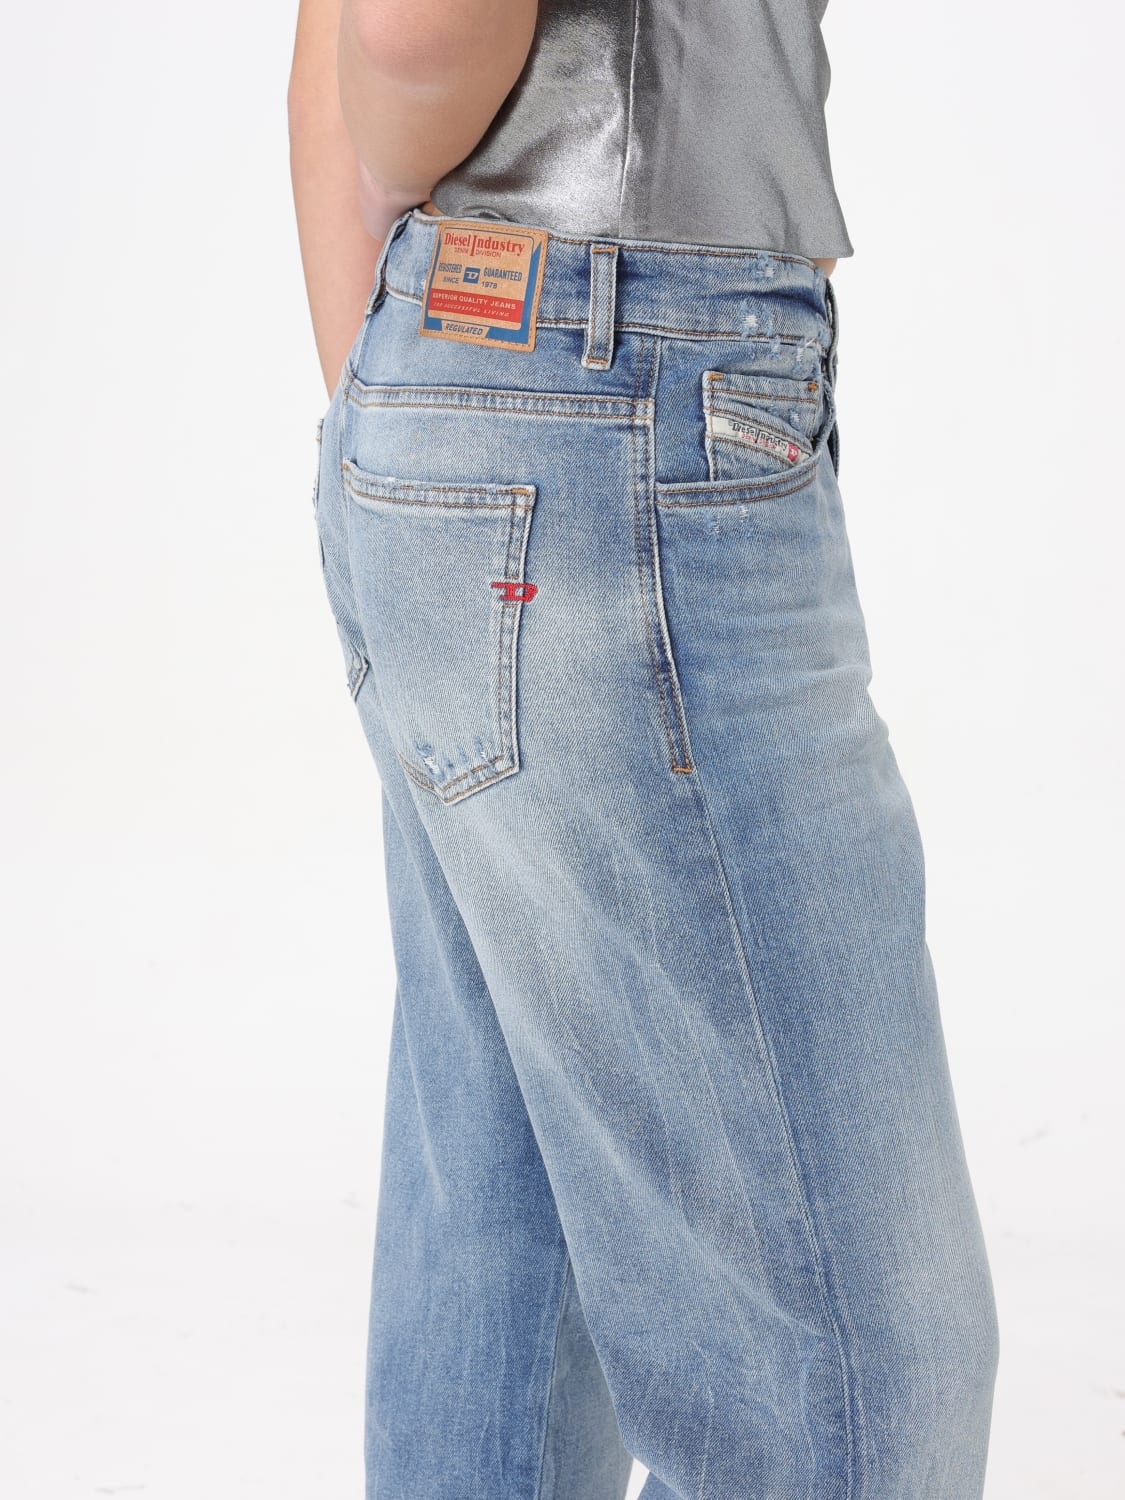 Jeans woman Diesel - 3